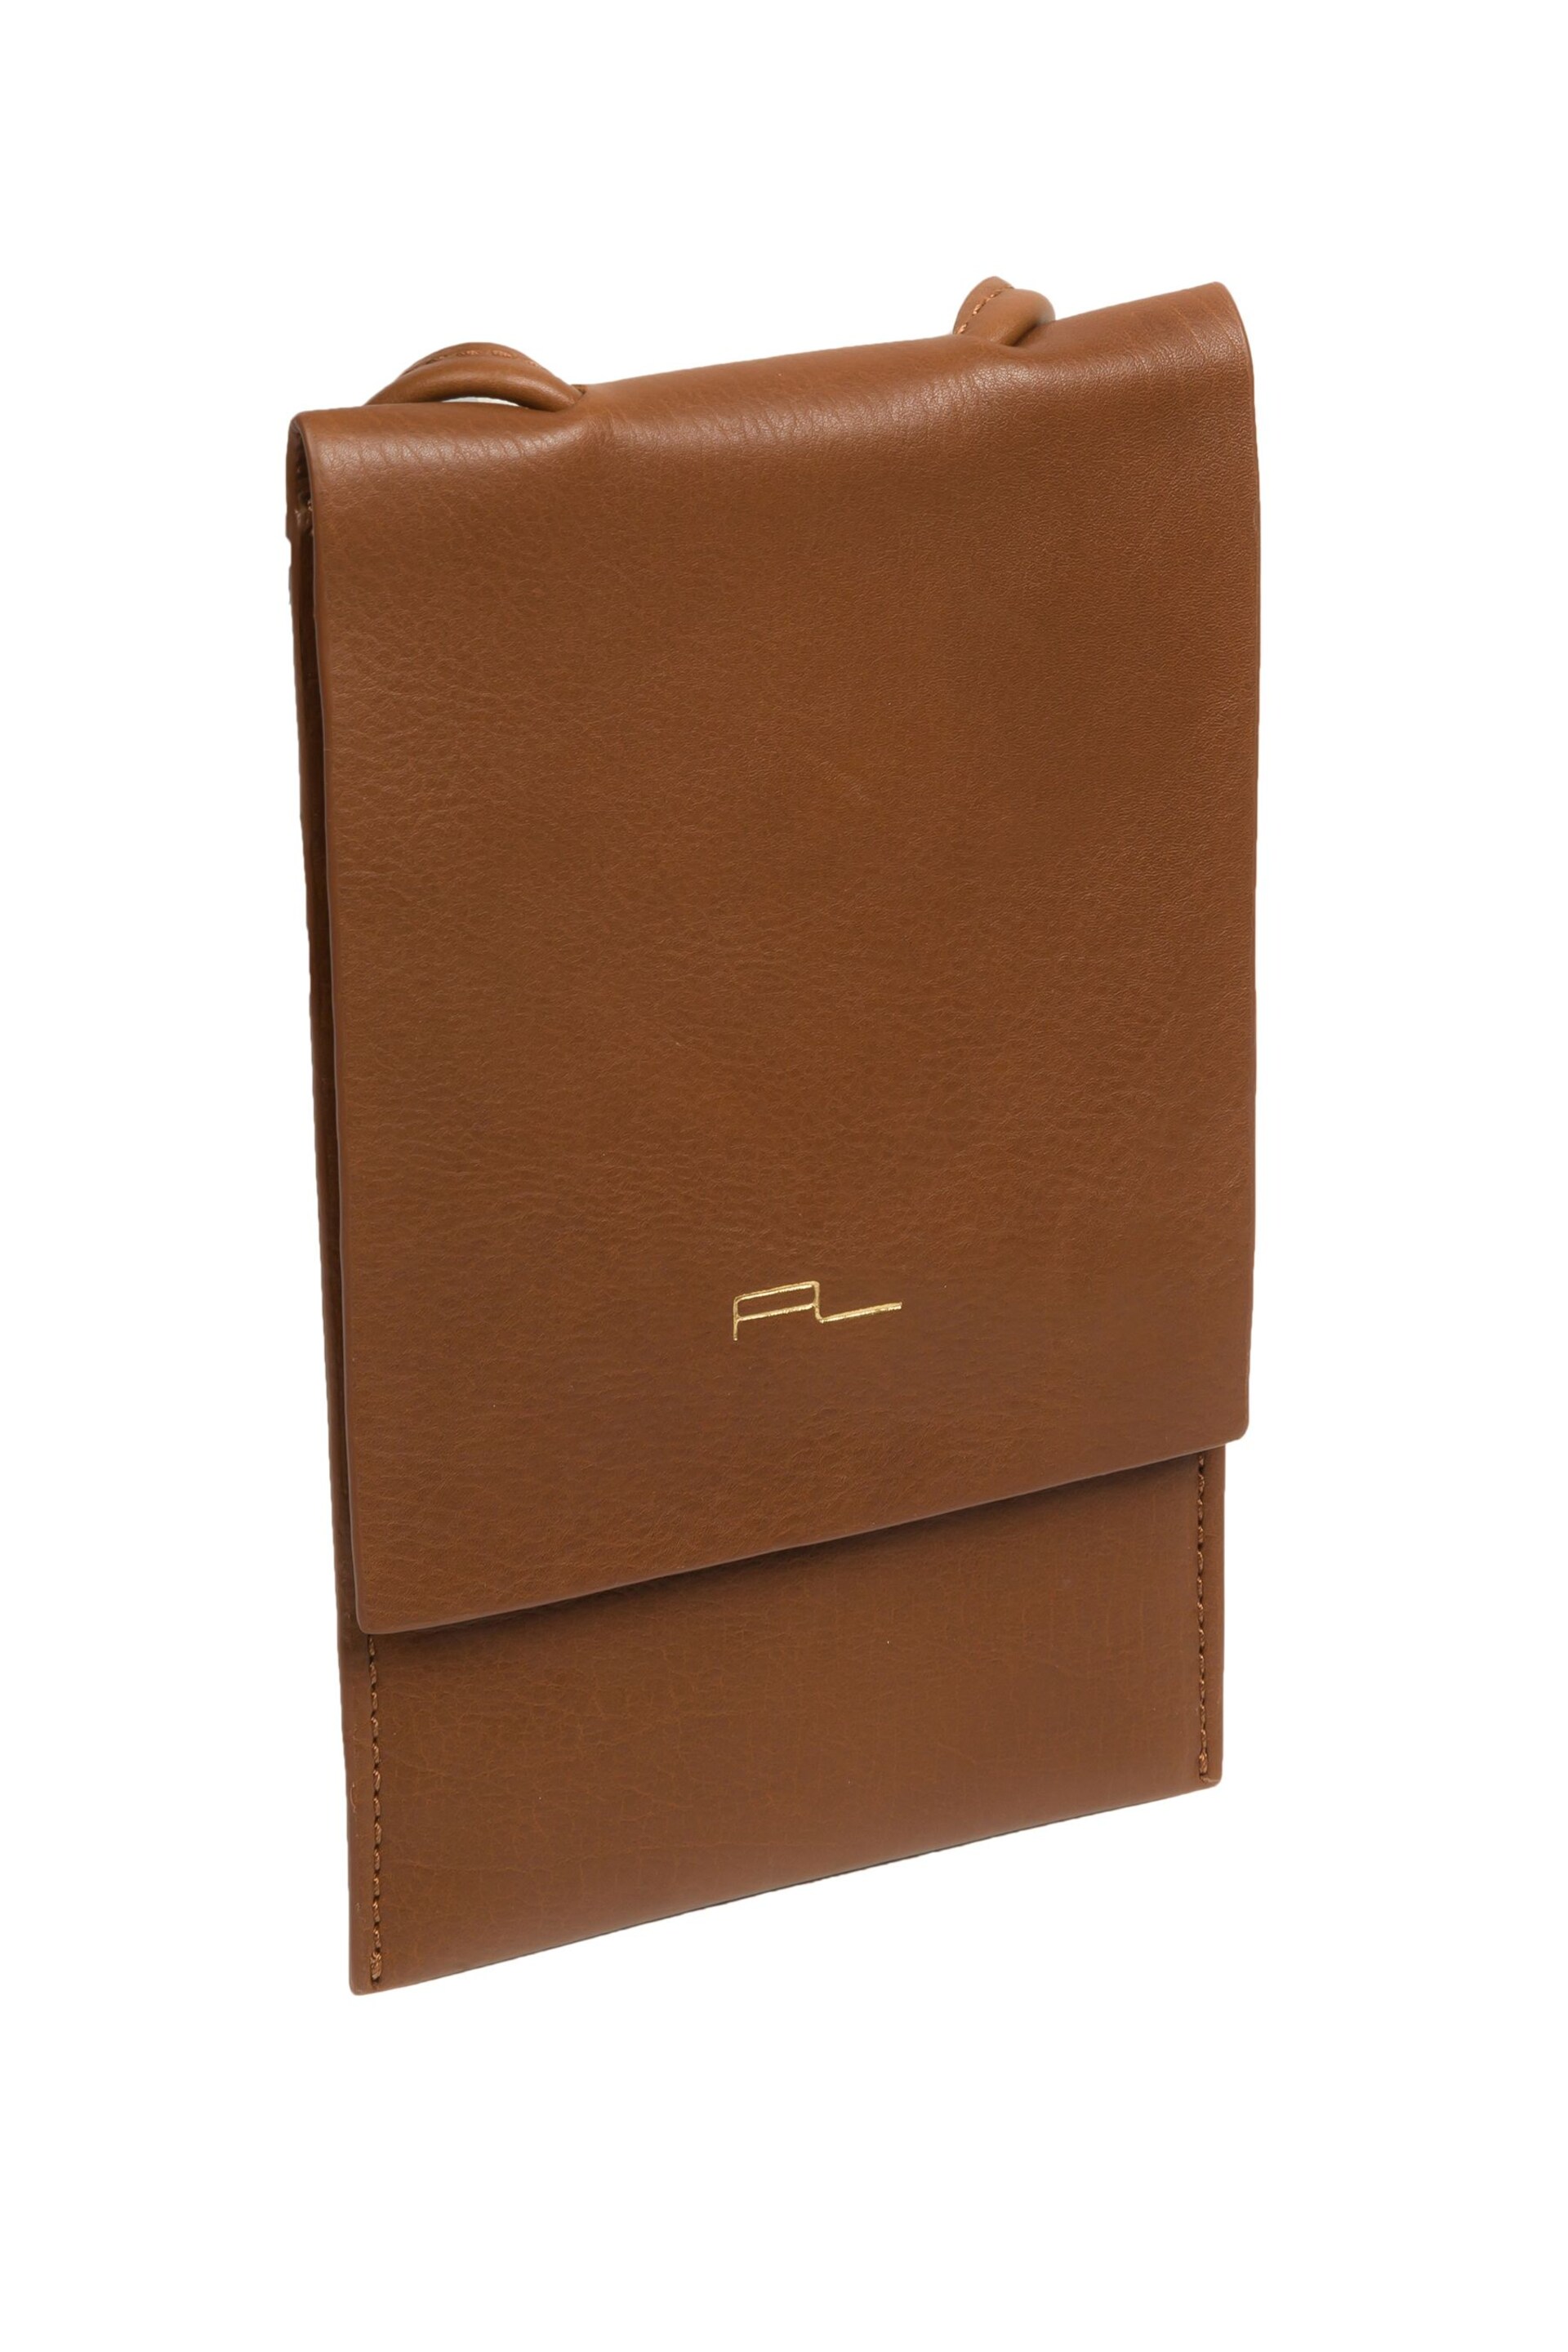 Pure Luxuries London Rina Nappa Leather Cross-Body Phone Bag - Image 3 of 7